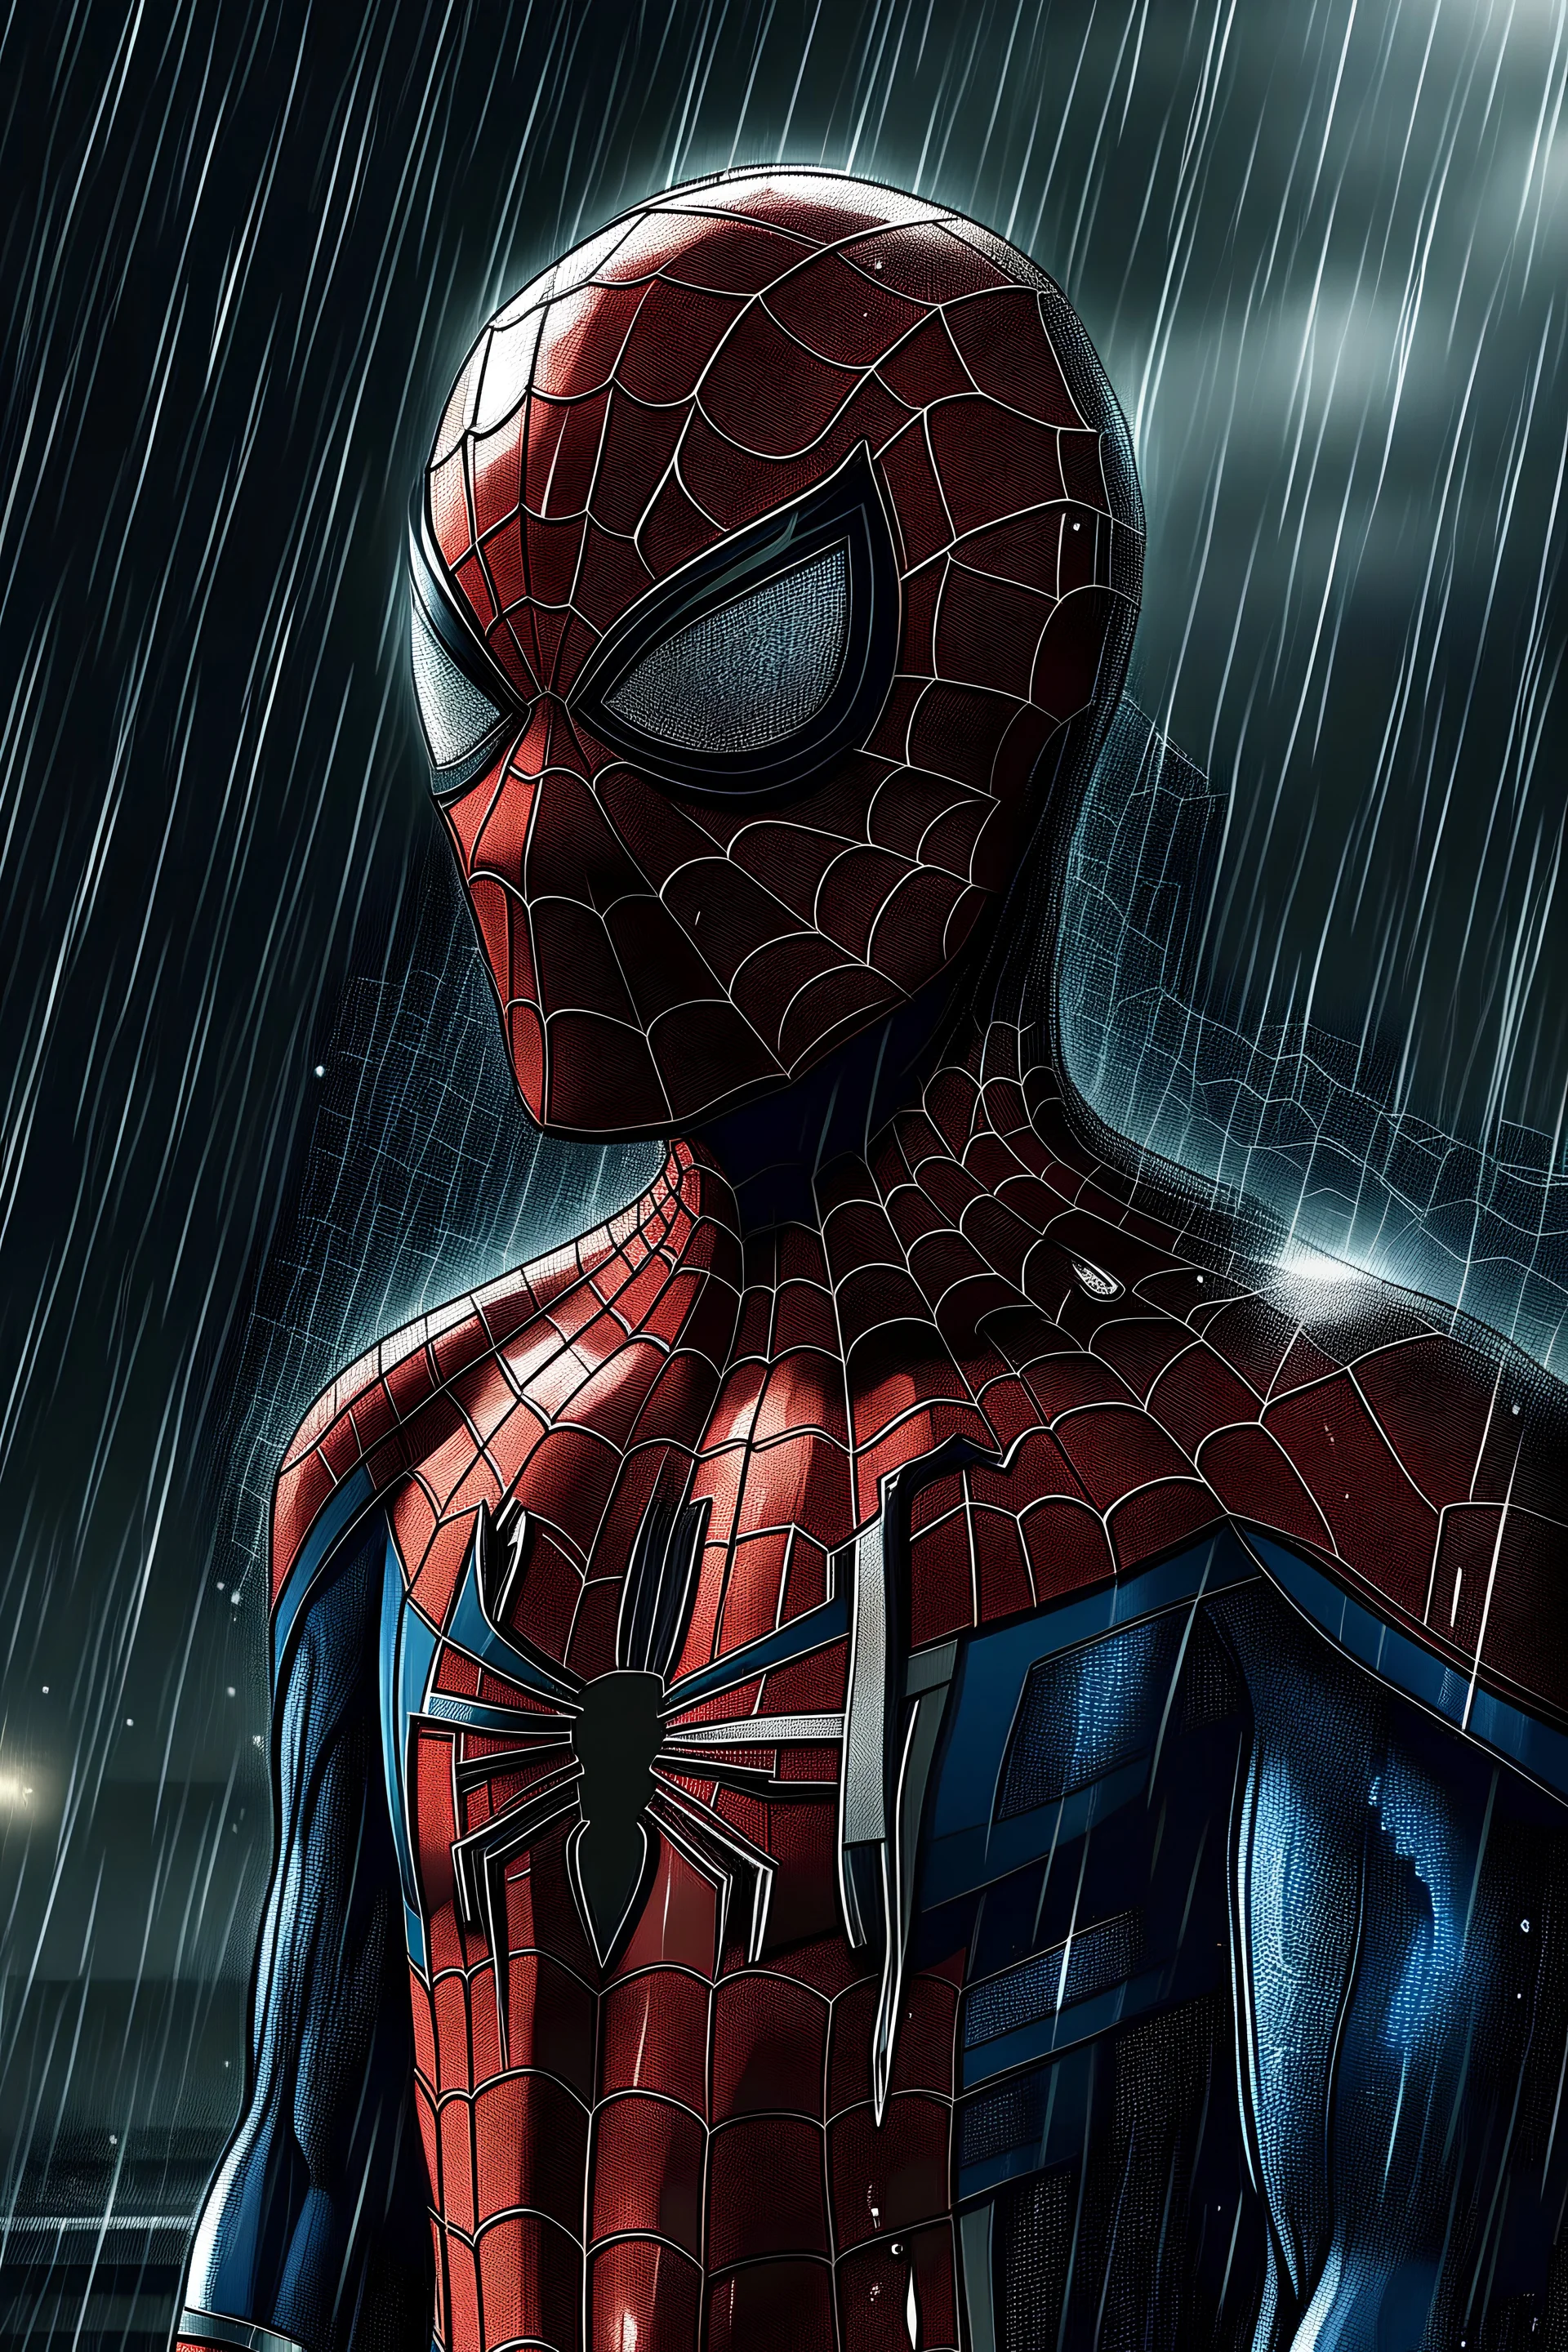 Spiderman with rain around